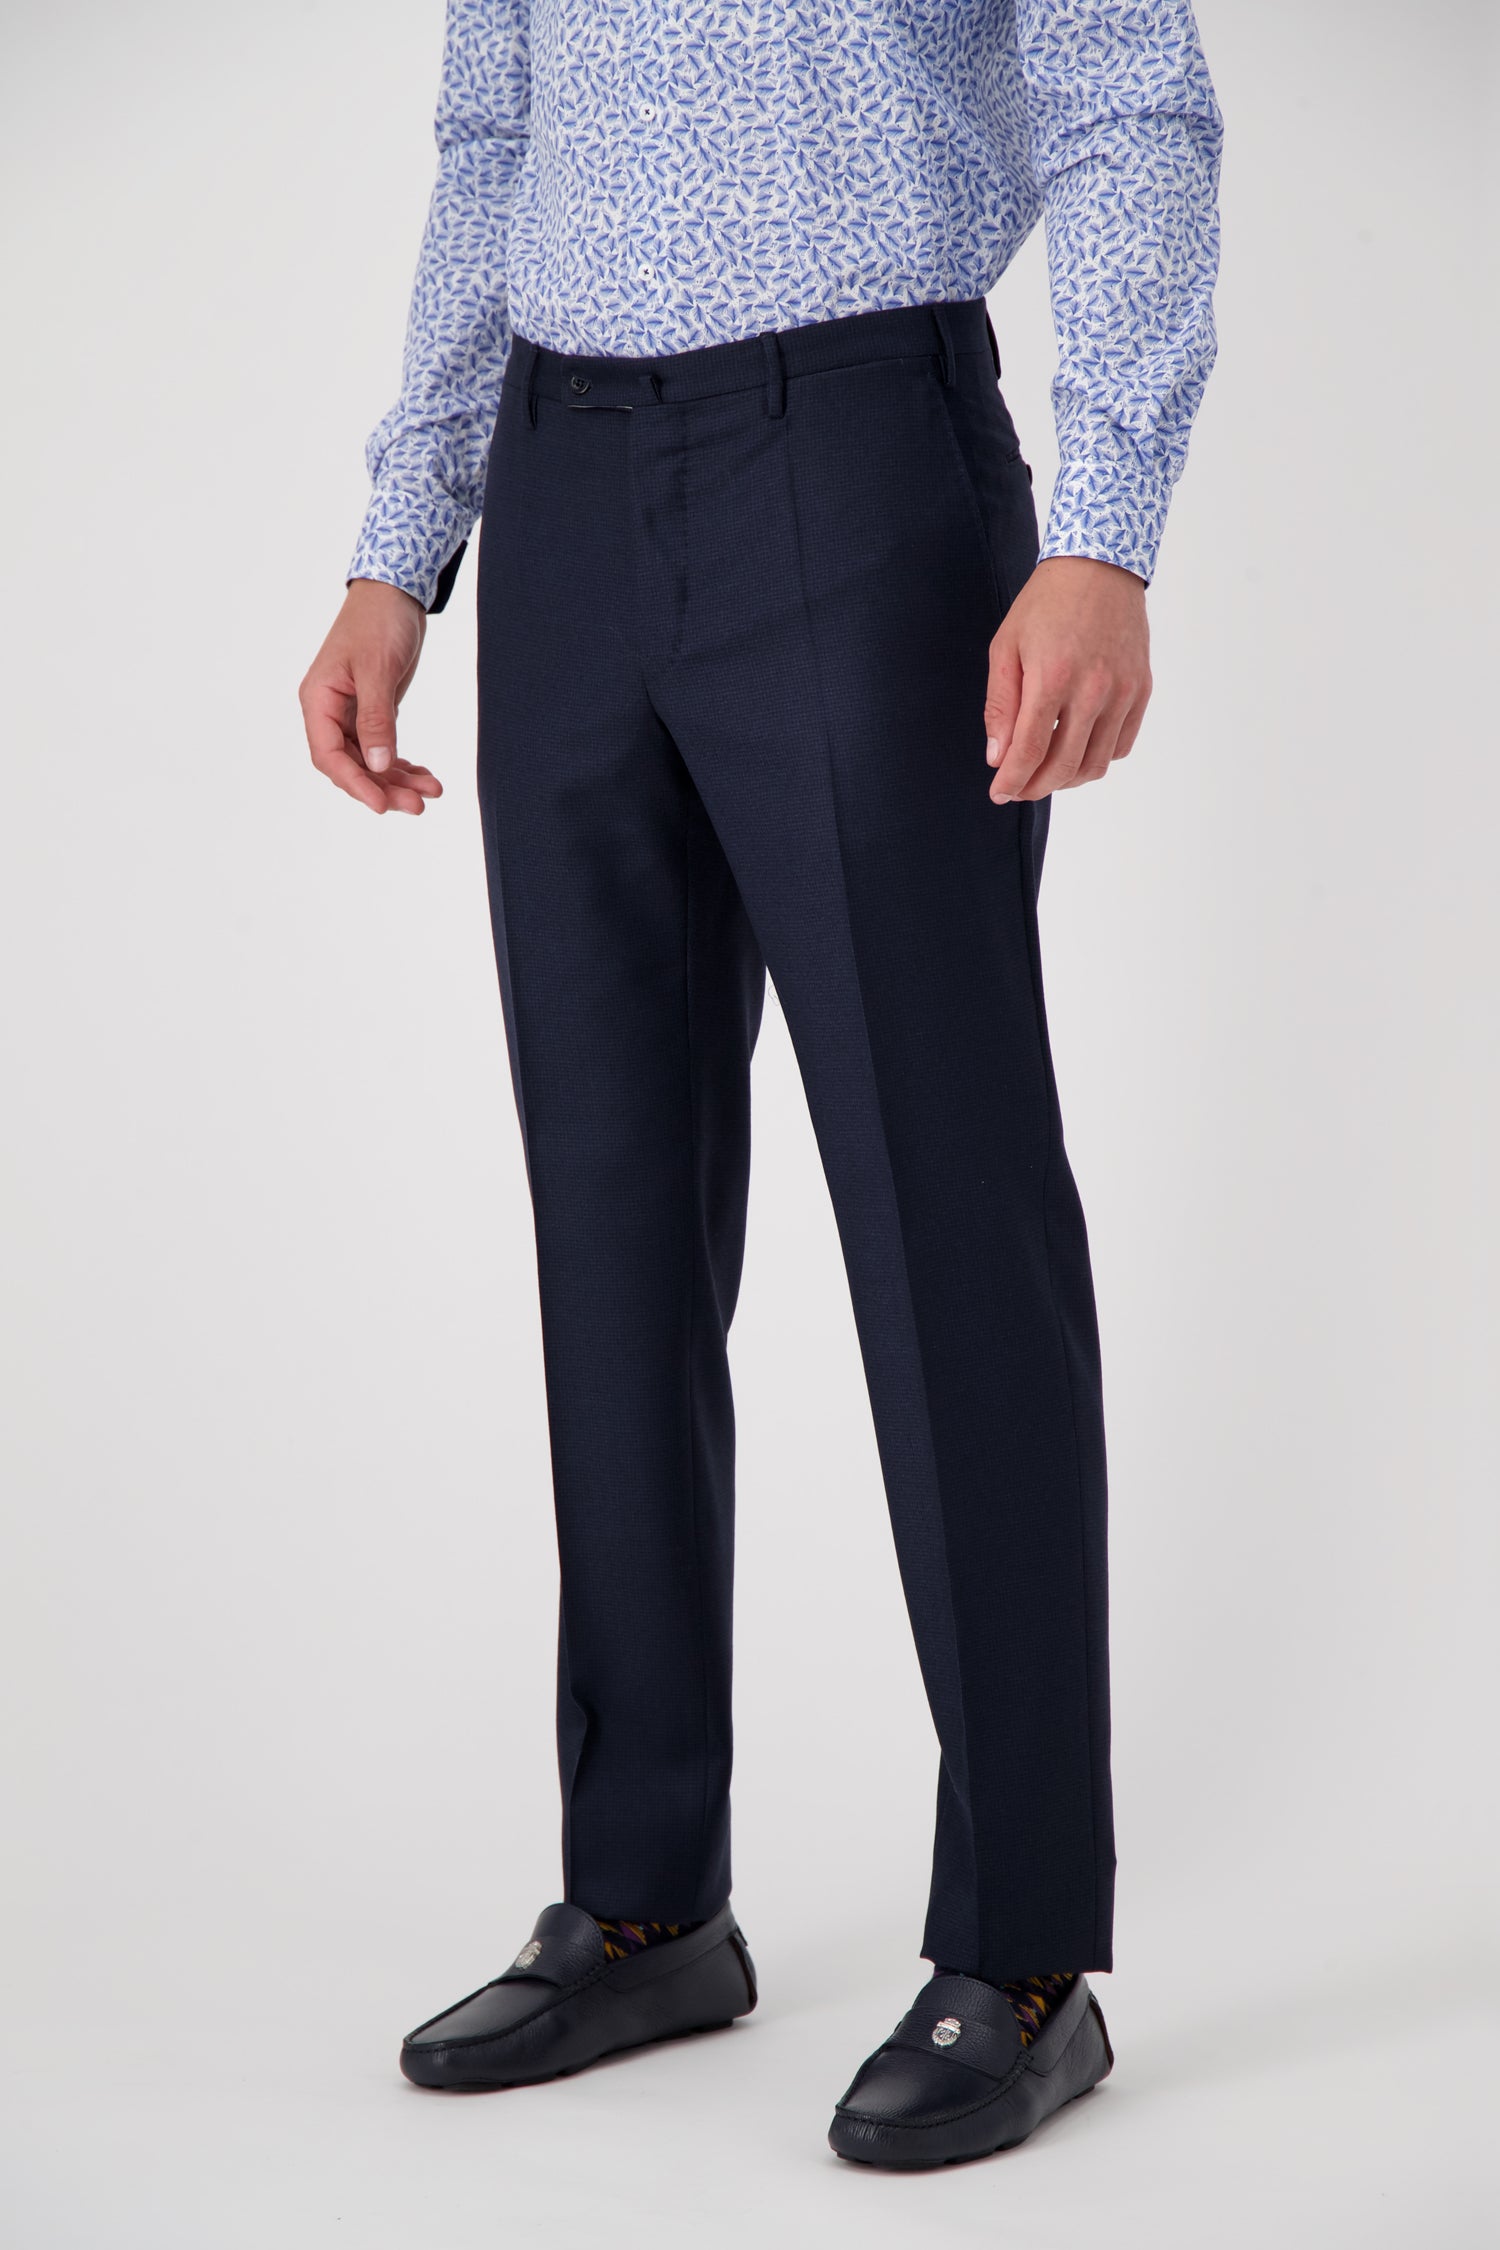 Incotex Navy Pattern Trousers